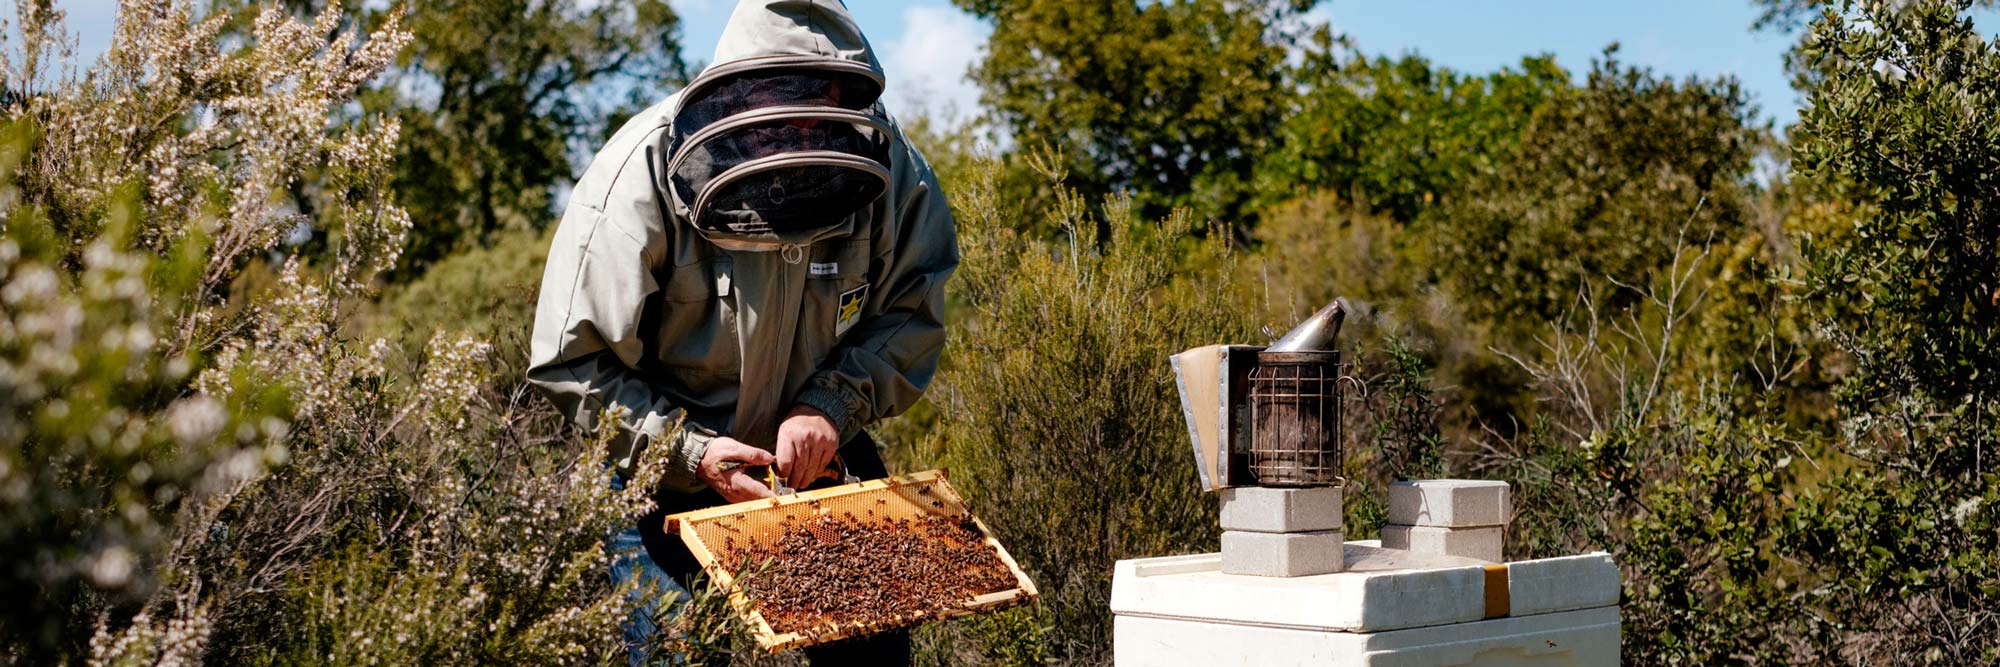 apiculteur français